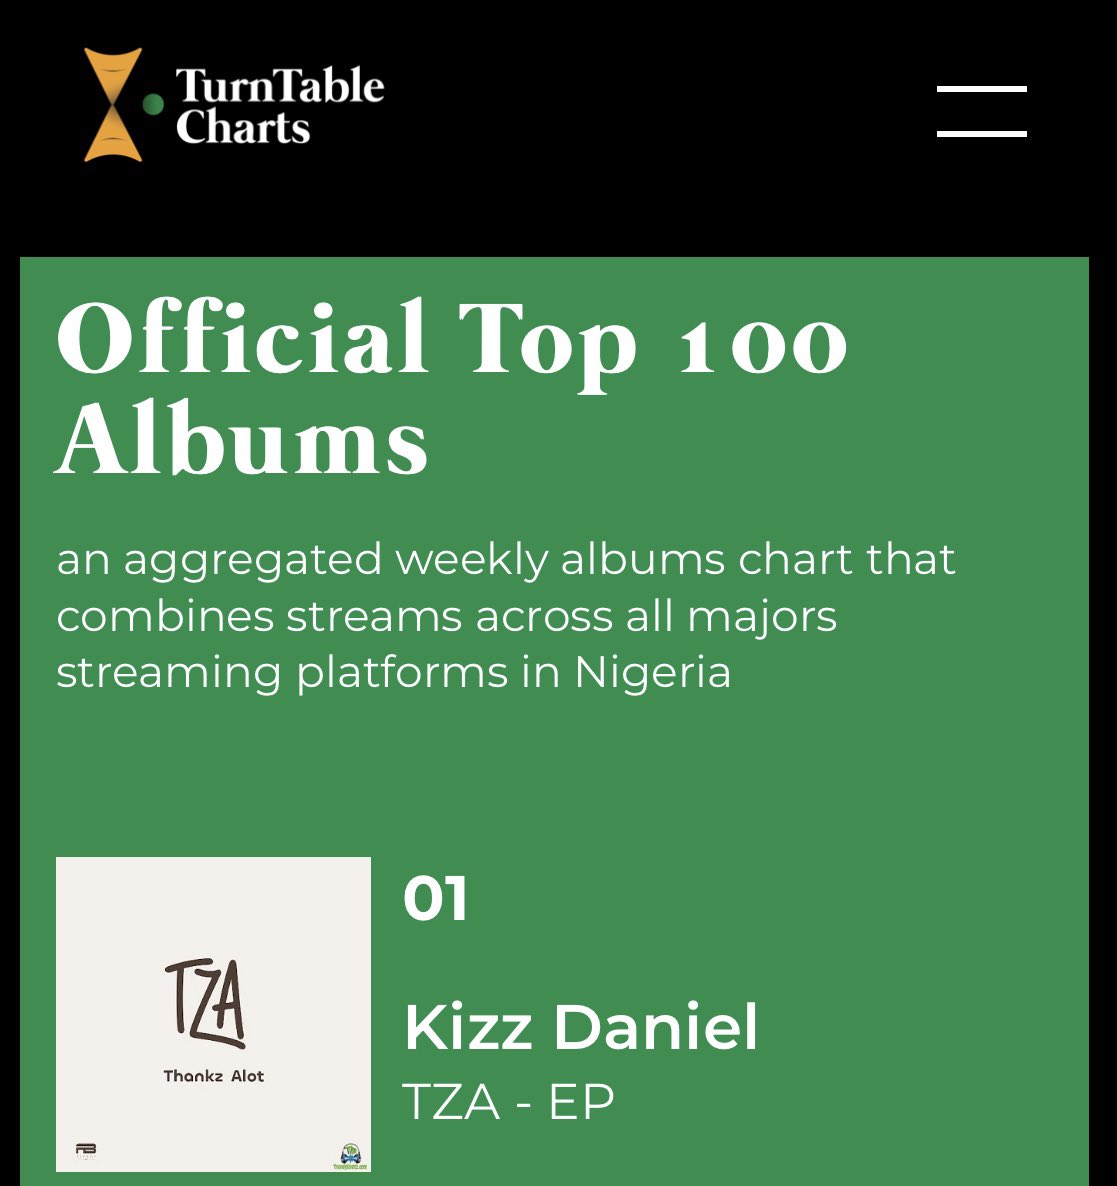 Top Albums in Nigeria this week (unit sales) #1 @KizzDaniel 3.3K #2 @seyi_vibez 2.6K #3 @Odumodublvck_ 2.14K #4 @plutomaniapopi 2.10K #5 @burnaboy 2.03K #6 @asakemusik 1.9K #7 @BalloRanking 1.4K #8 @BNXN 1.1K #9 @Omah_Lay 1.06K #10 @asakemusik 1.06K See full chart here